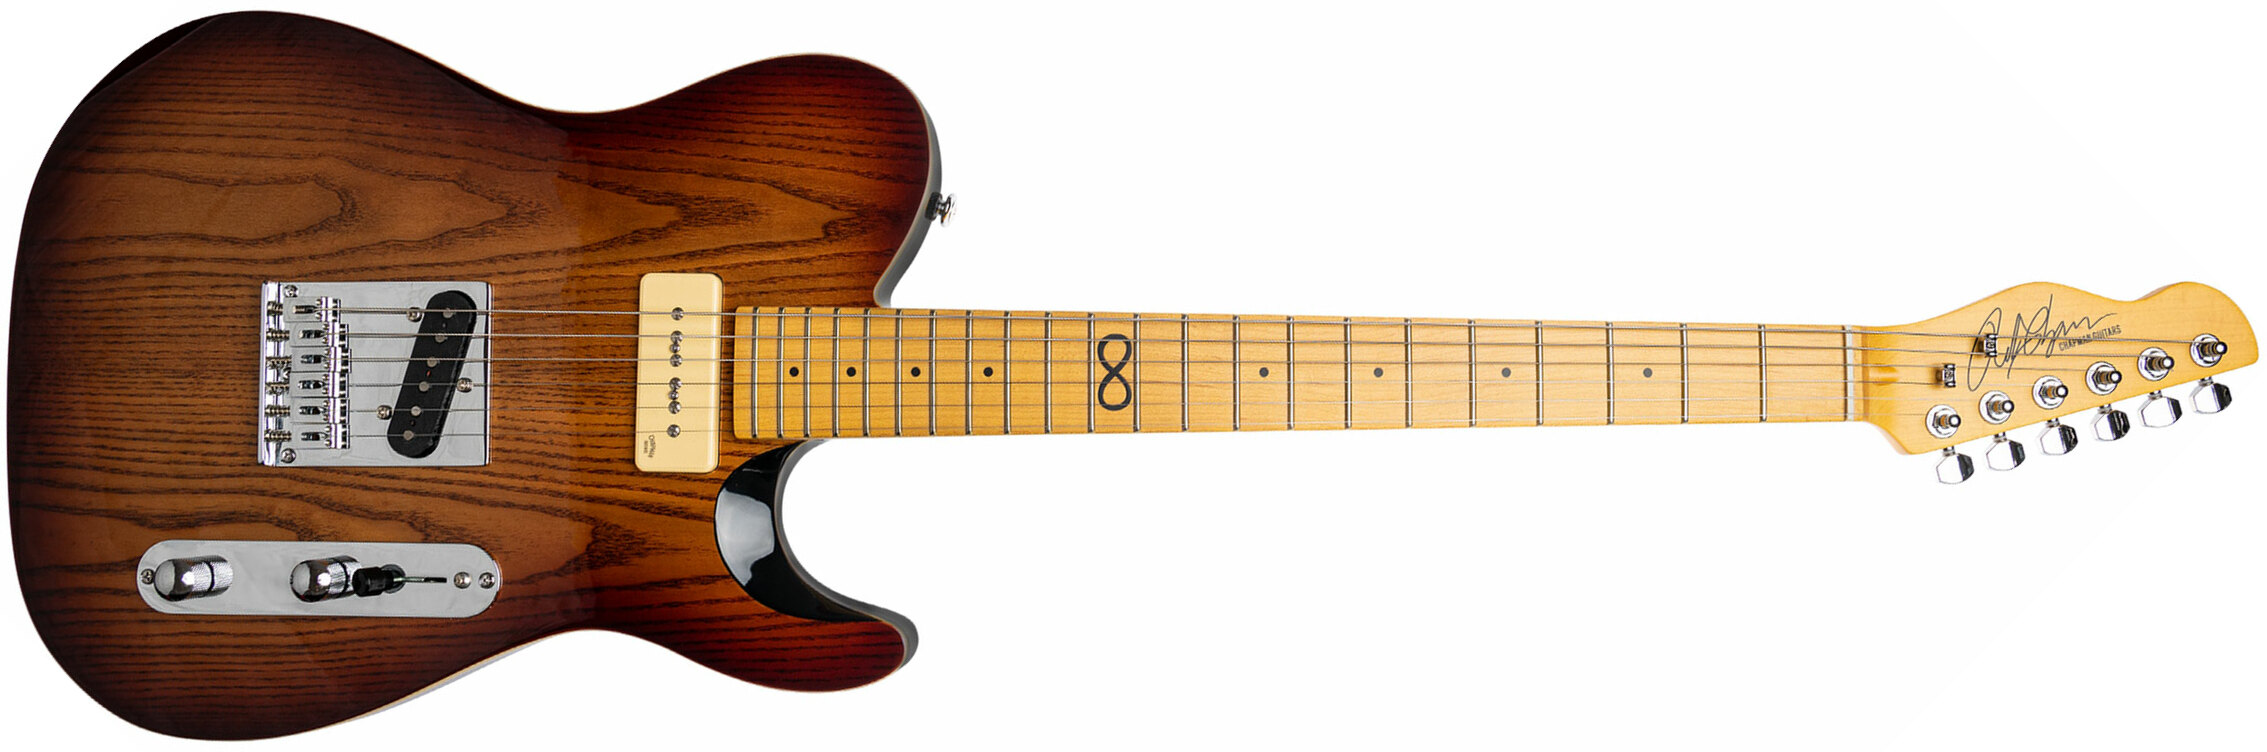 Chapman Guitars Ml3 Traditional Standard Sp90 Ht Mn - Tobacco Ash - Tel shape electric guitar - Main picture